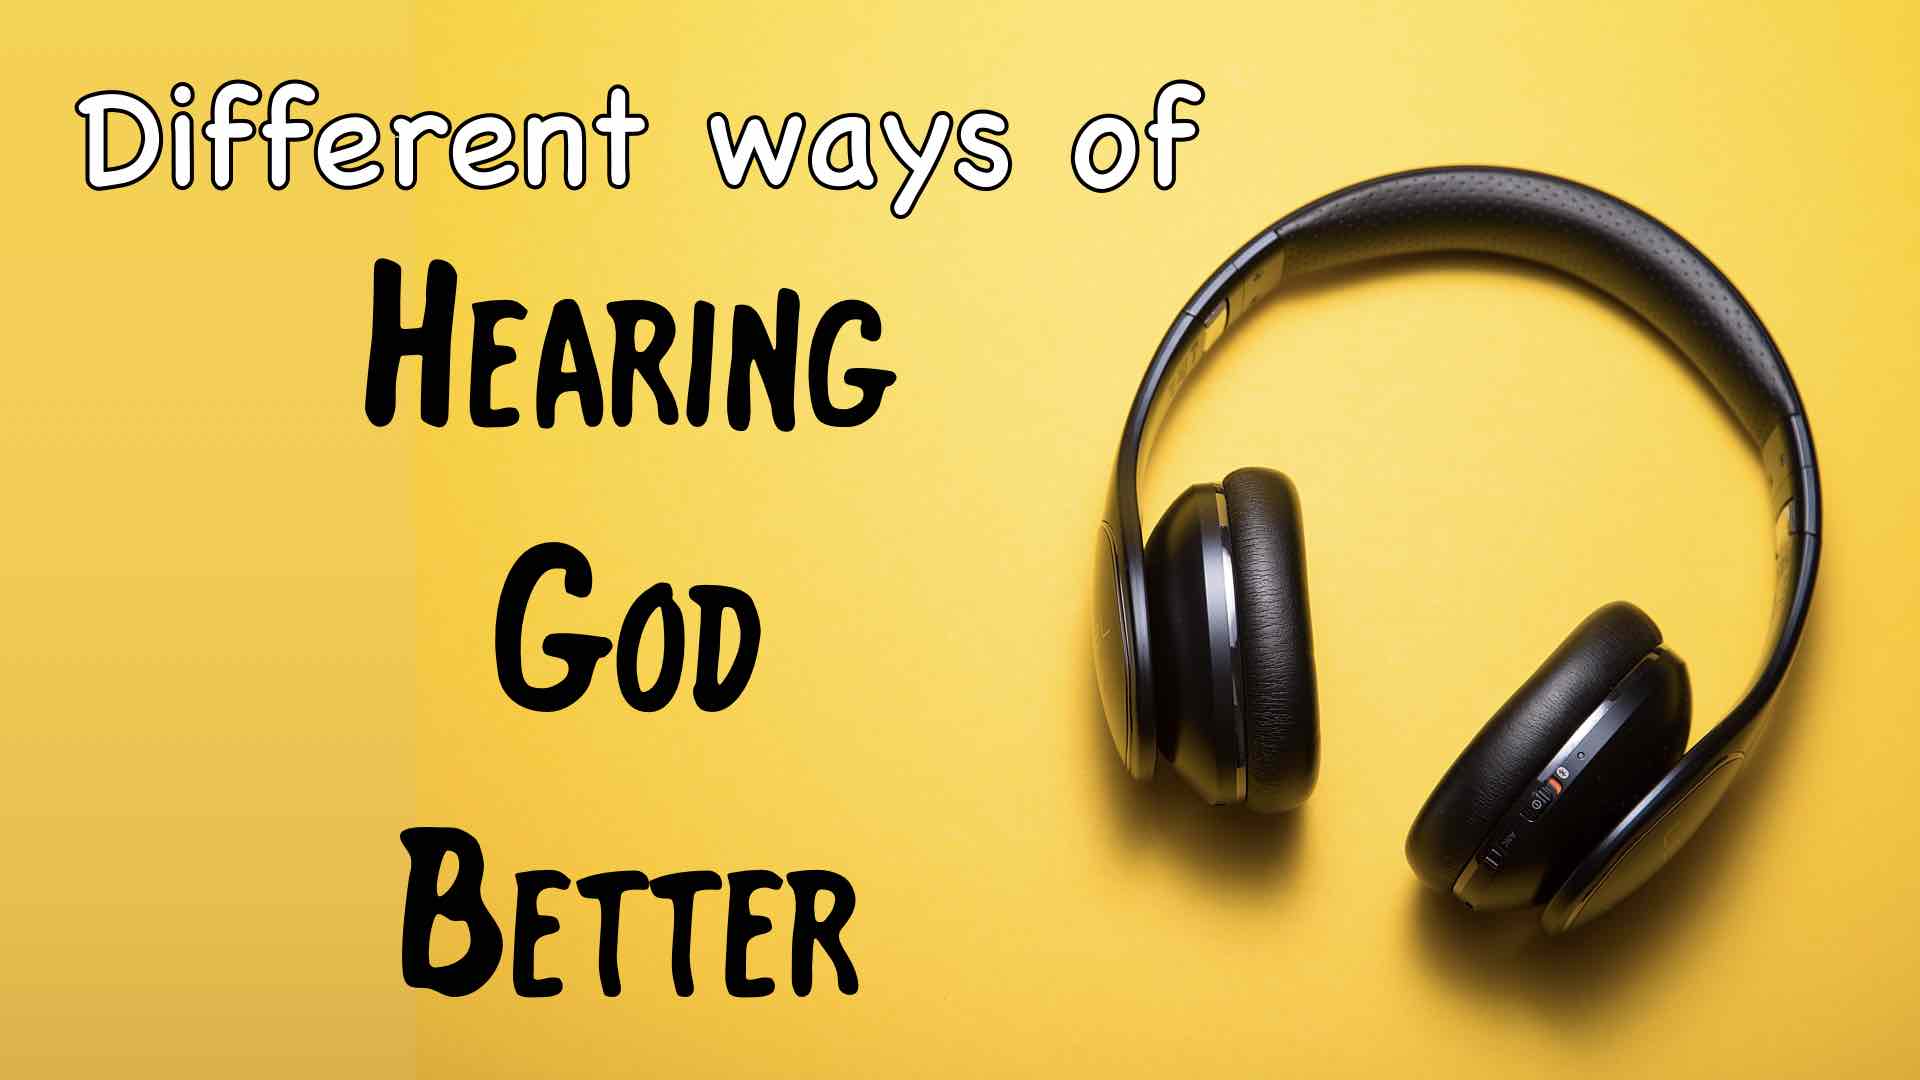 hearing God better - different